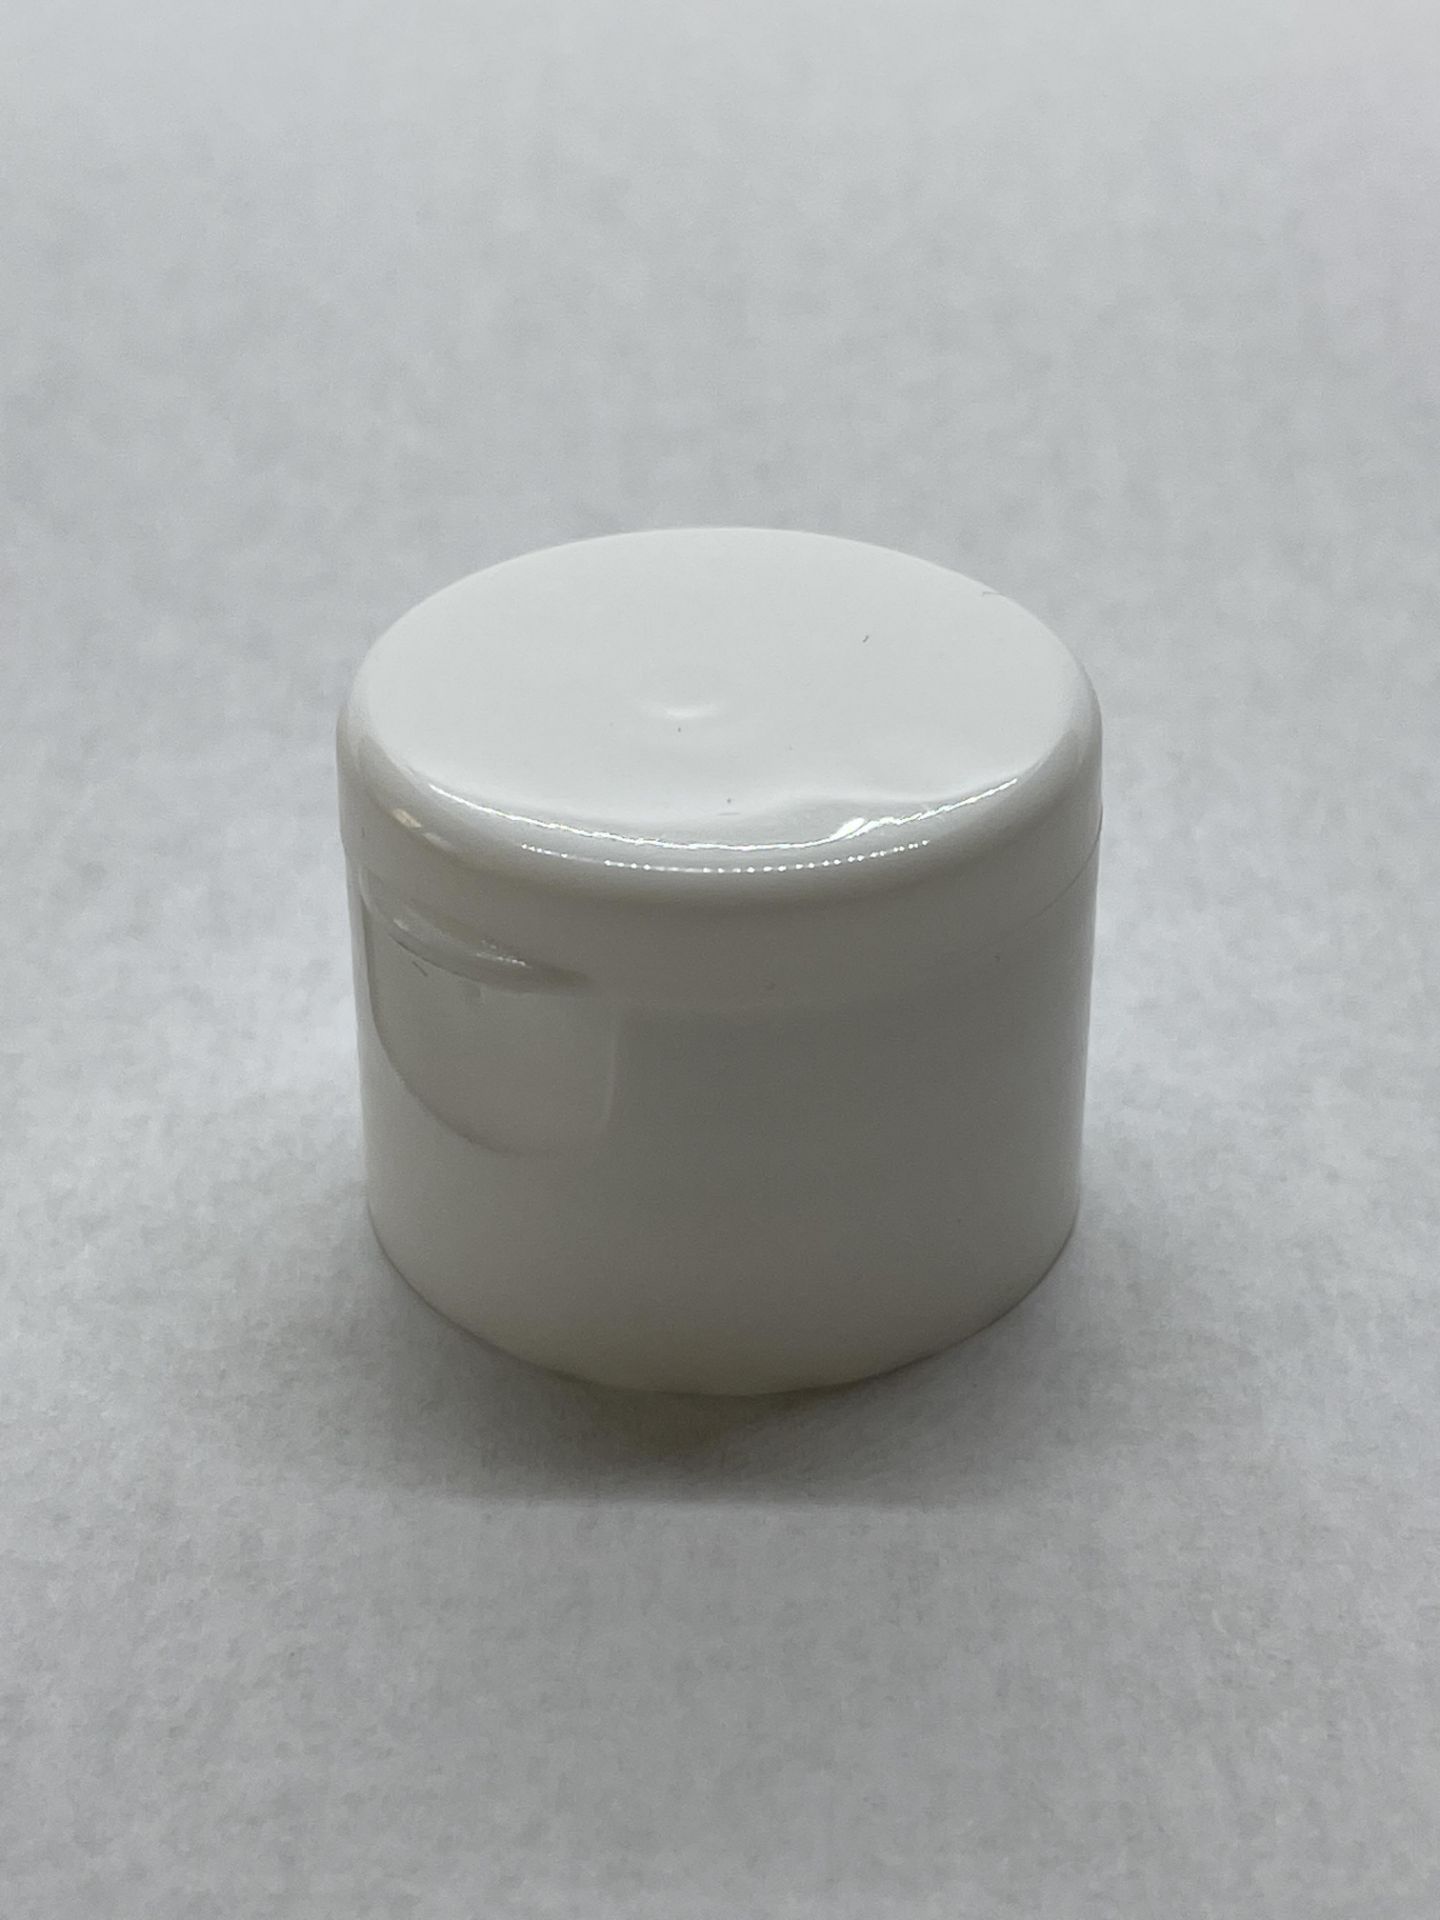 74,000 - White Clip Bottle Cap that fits 16oz bottle, 28-410 Threading - Image 2 of 3